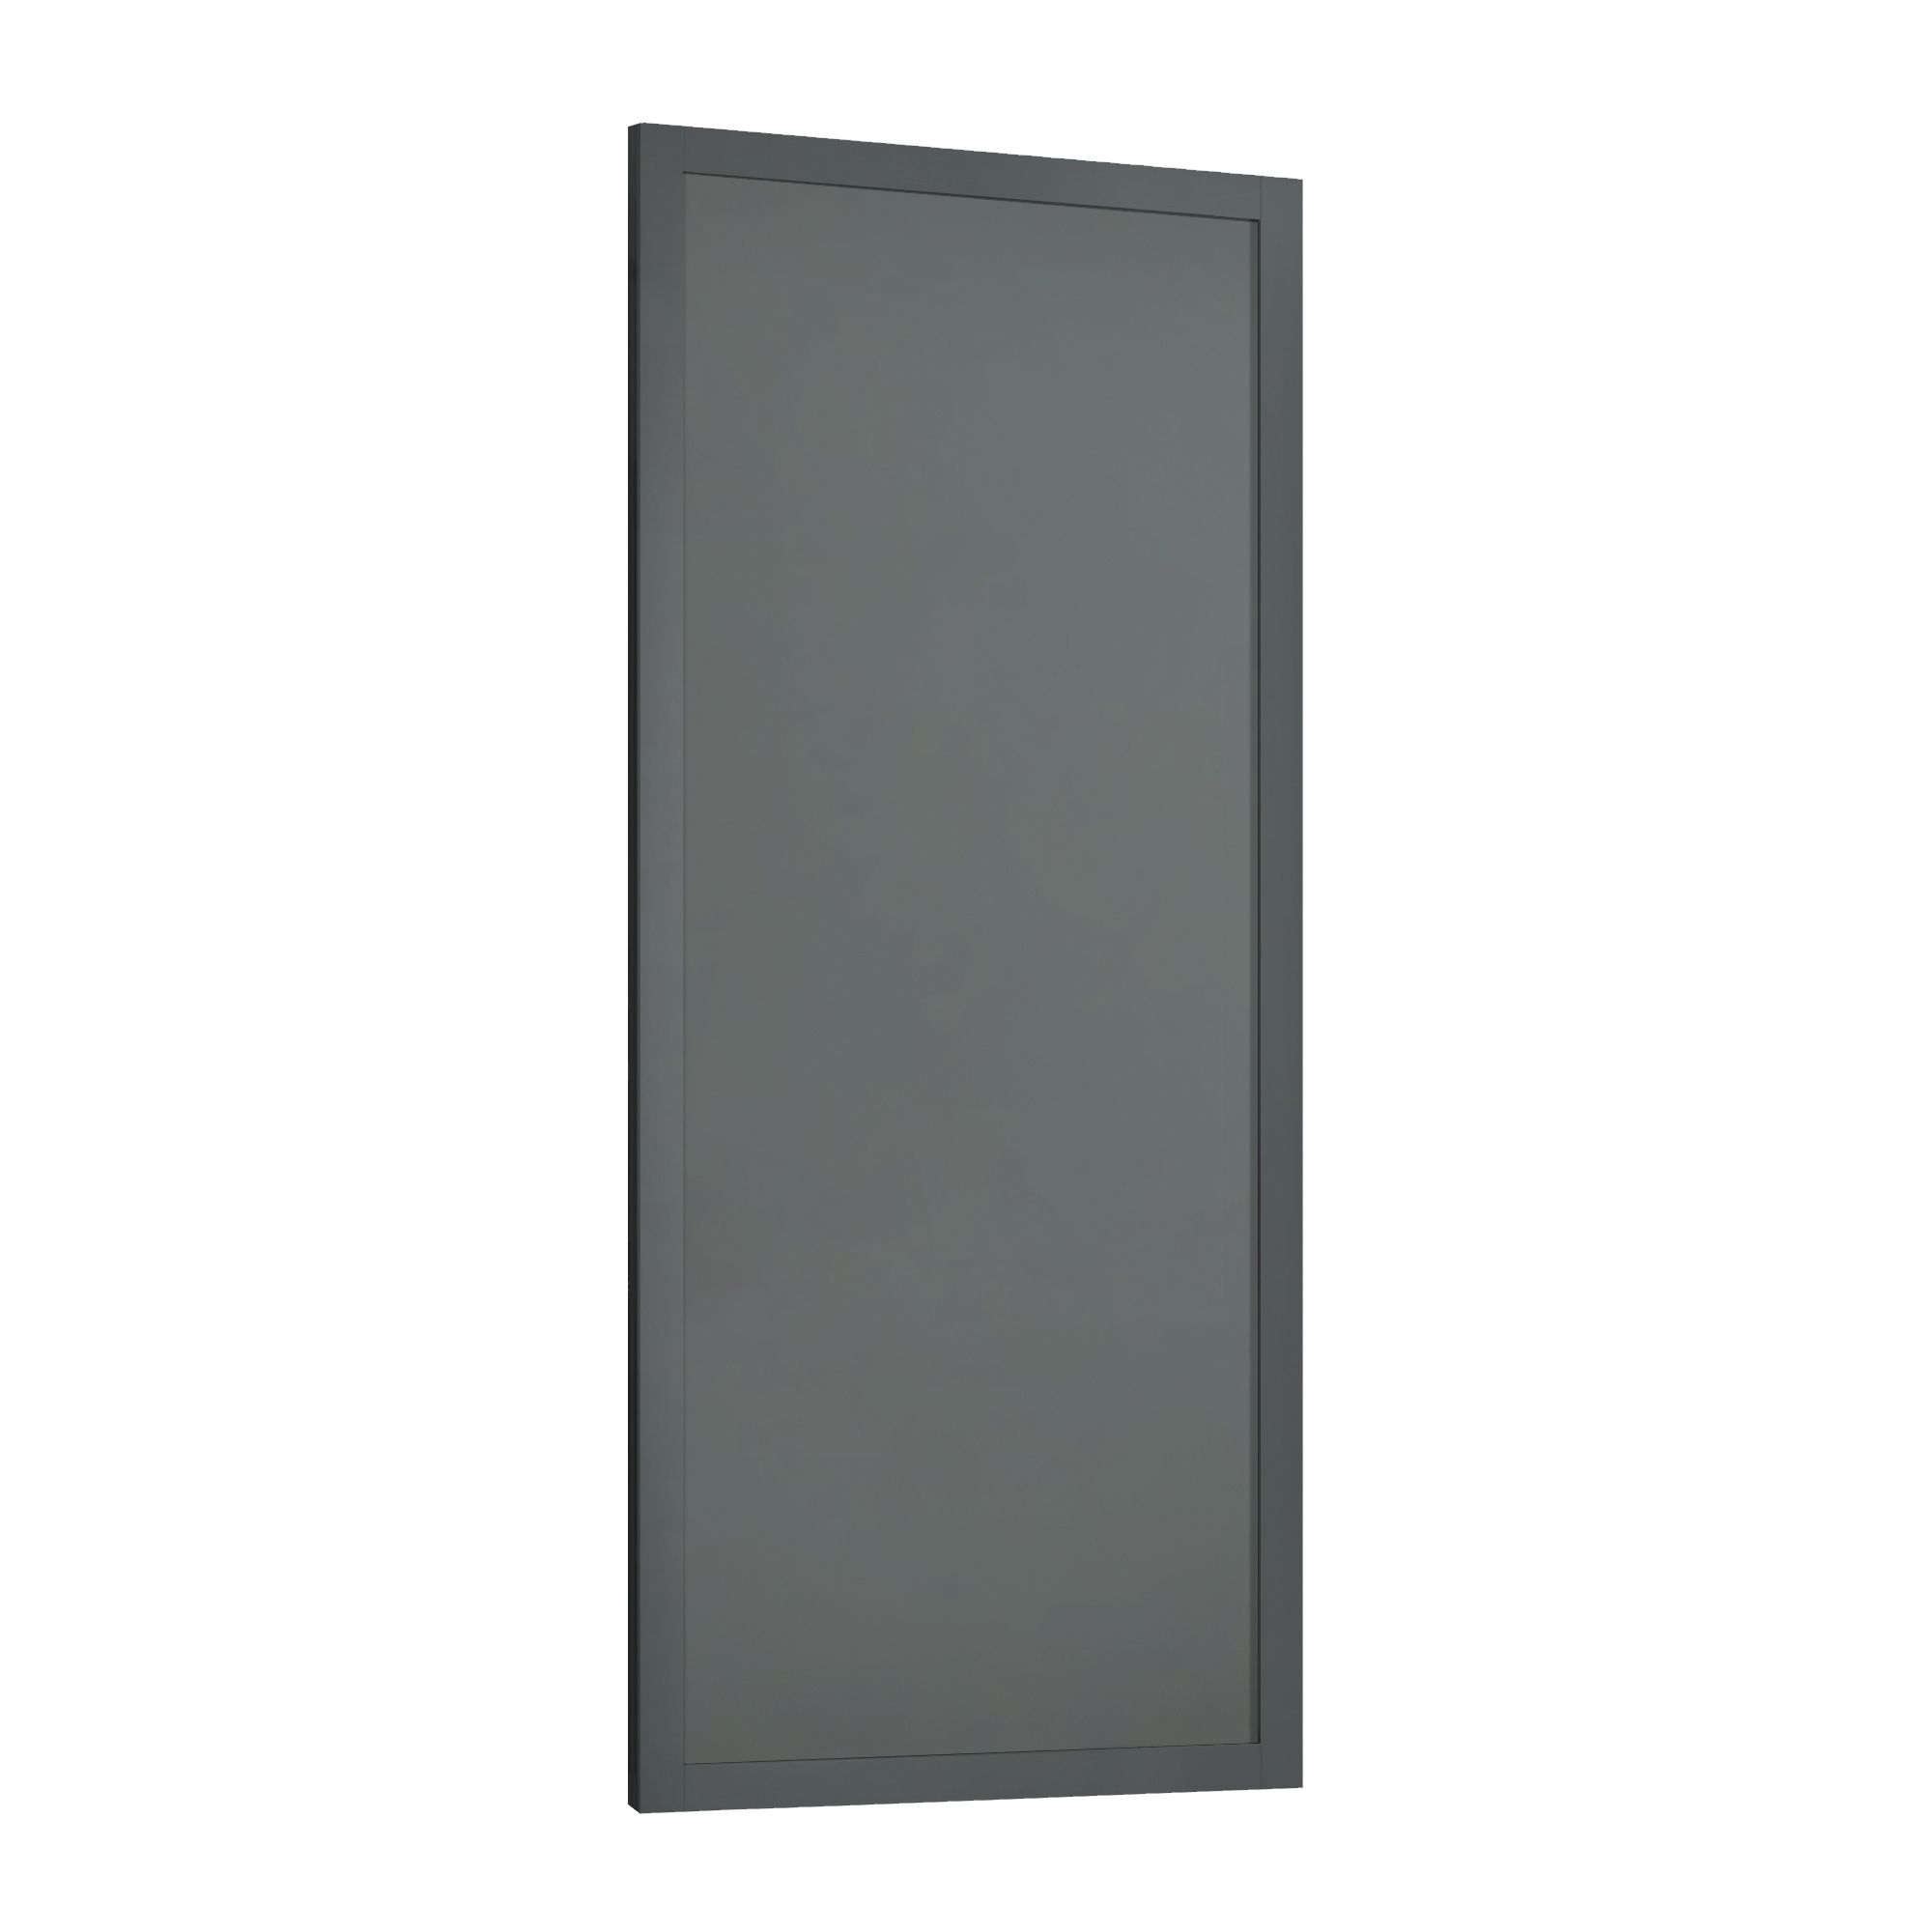 Spacepro Shaker Matt Dark Grey Single panel Sliding wardrobe door (H) 2220mm x (W) 762mm